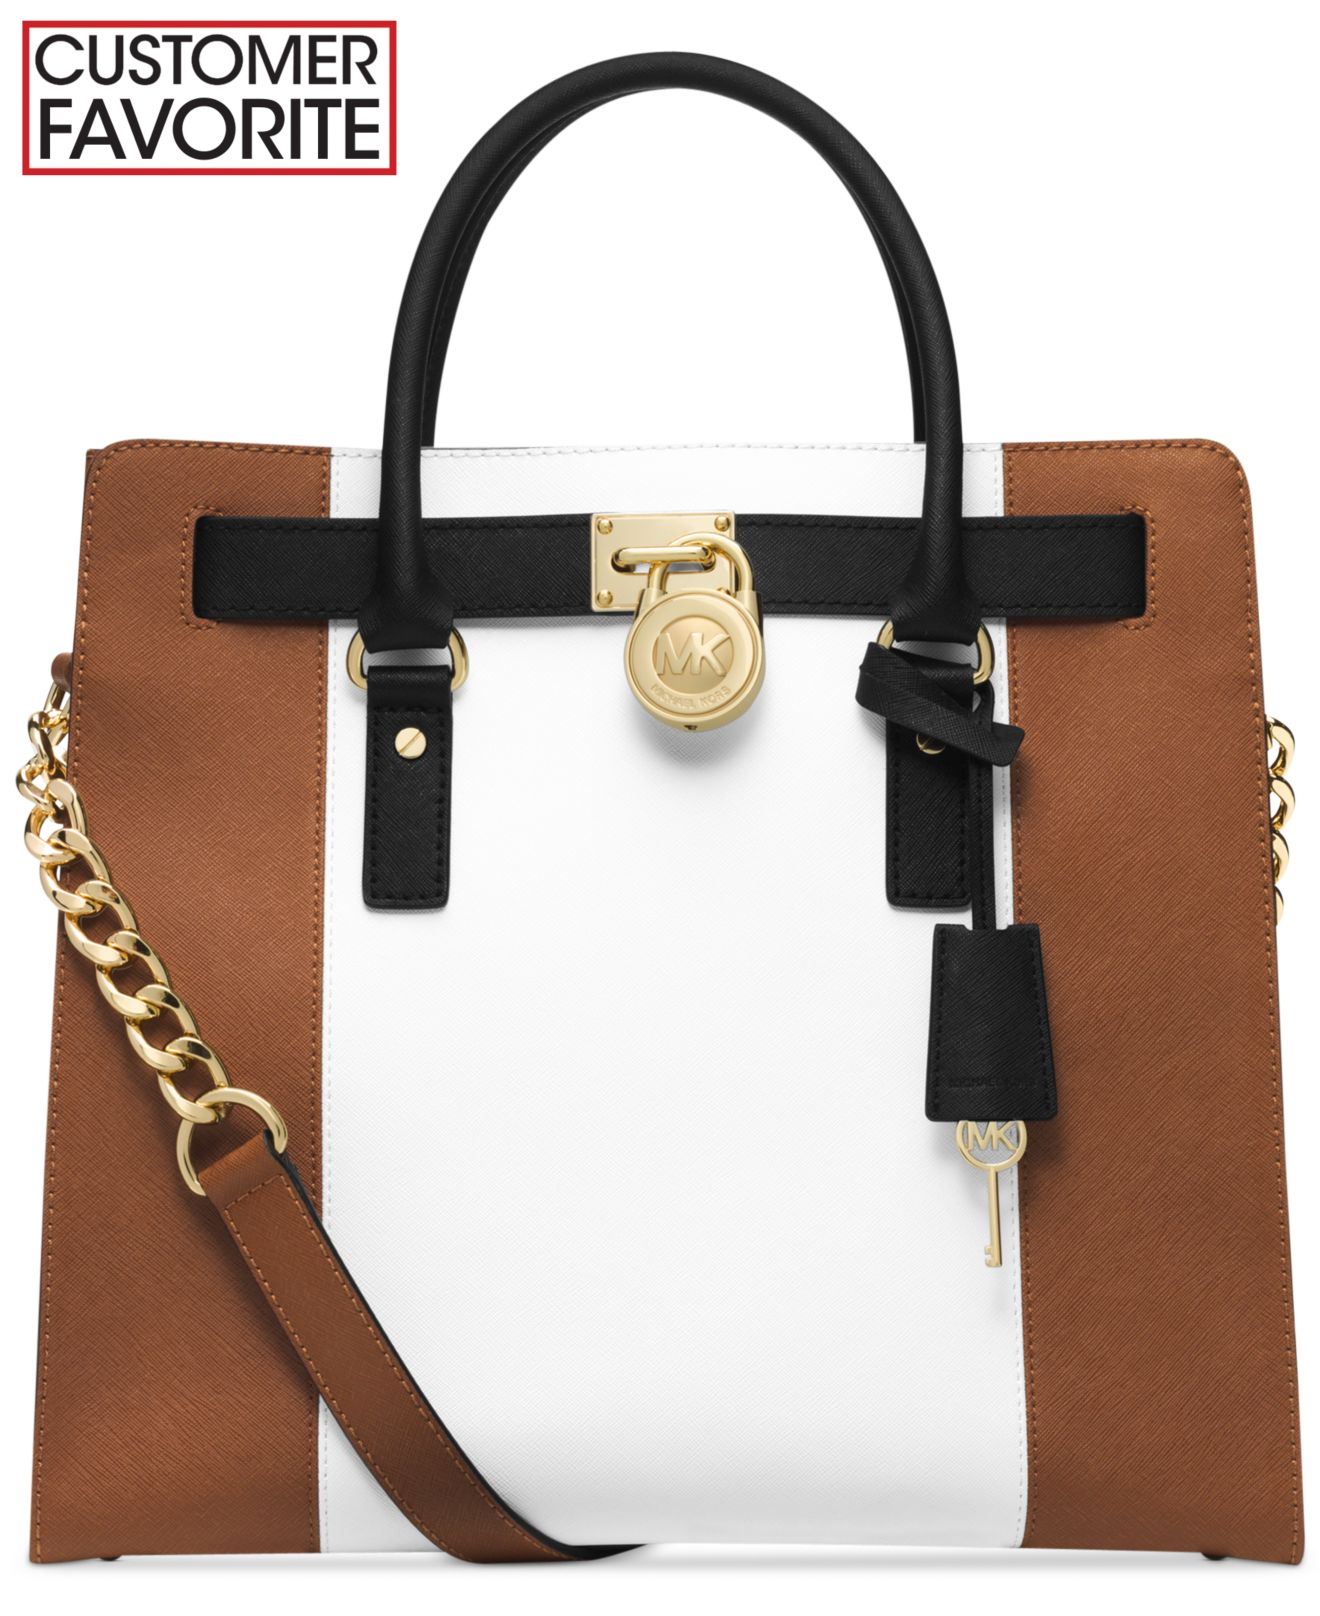 Michael Kors Hamilton Large N/S Black Leather Satchel Tote Bag Handbag